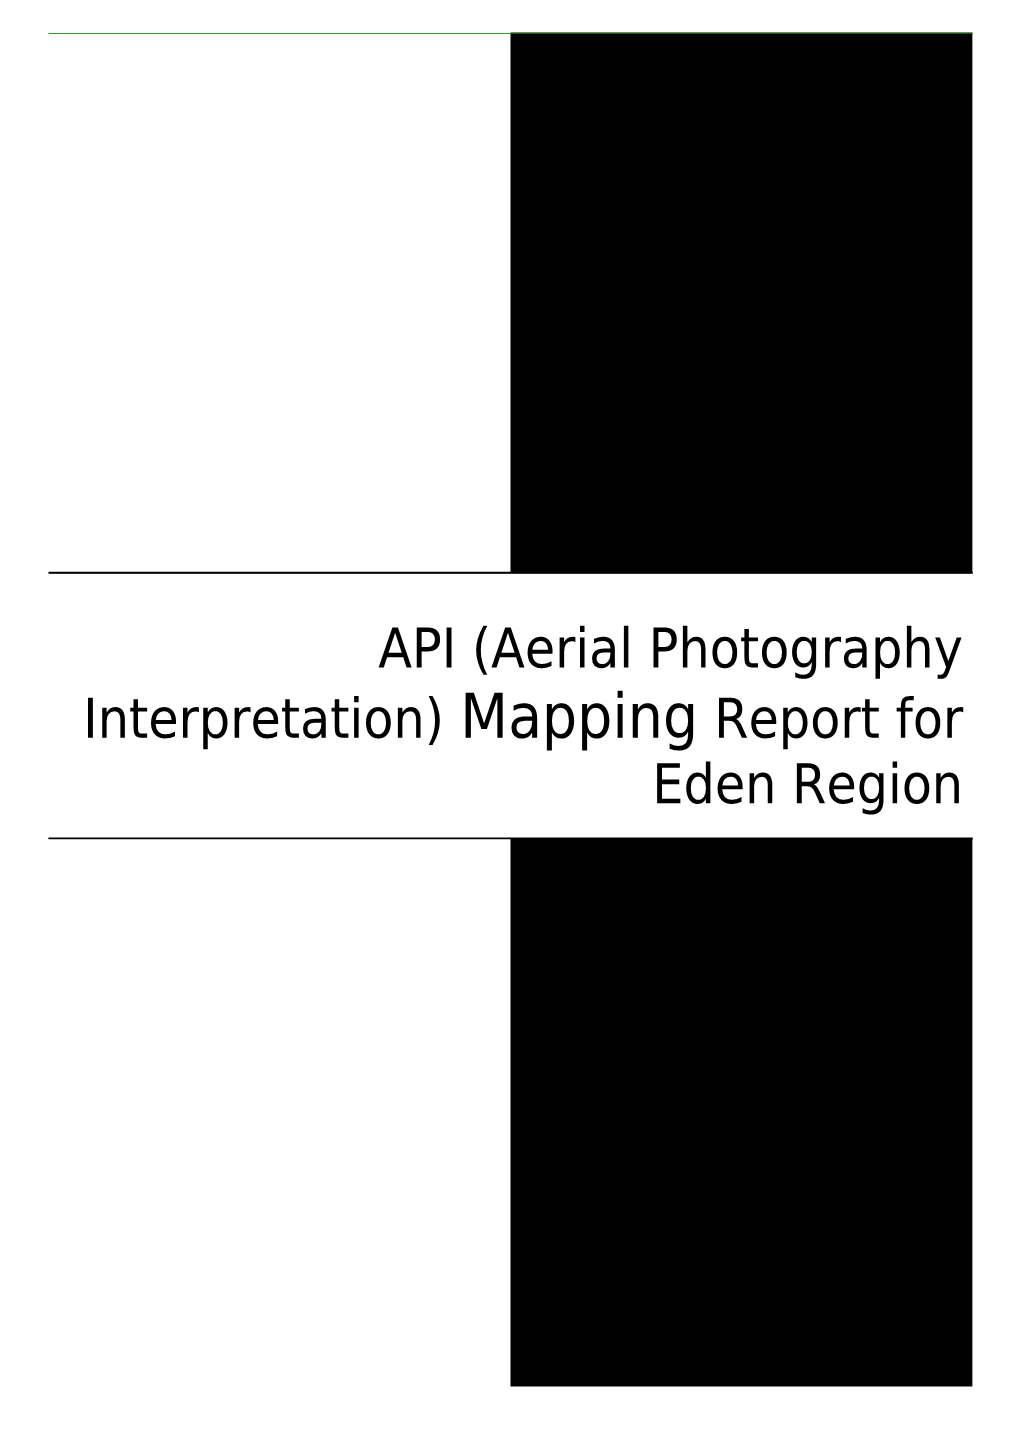 Api (Aerial Photography Interpretation) Mapping Report for Eden Region